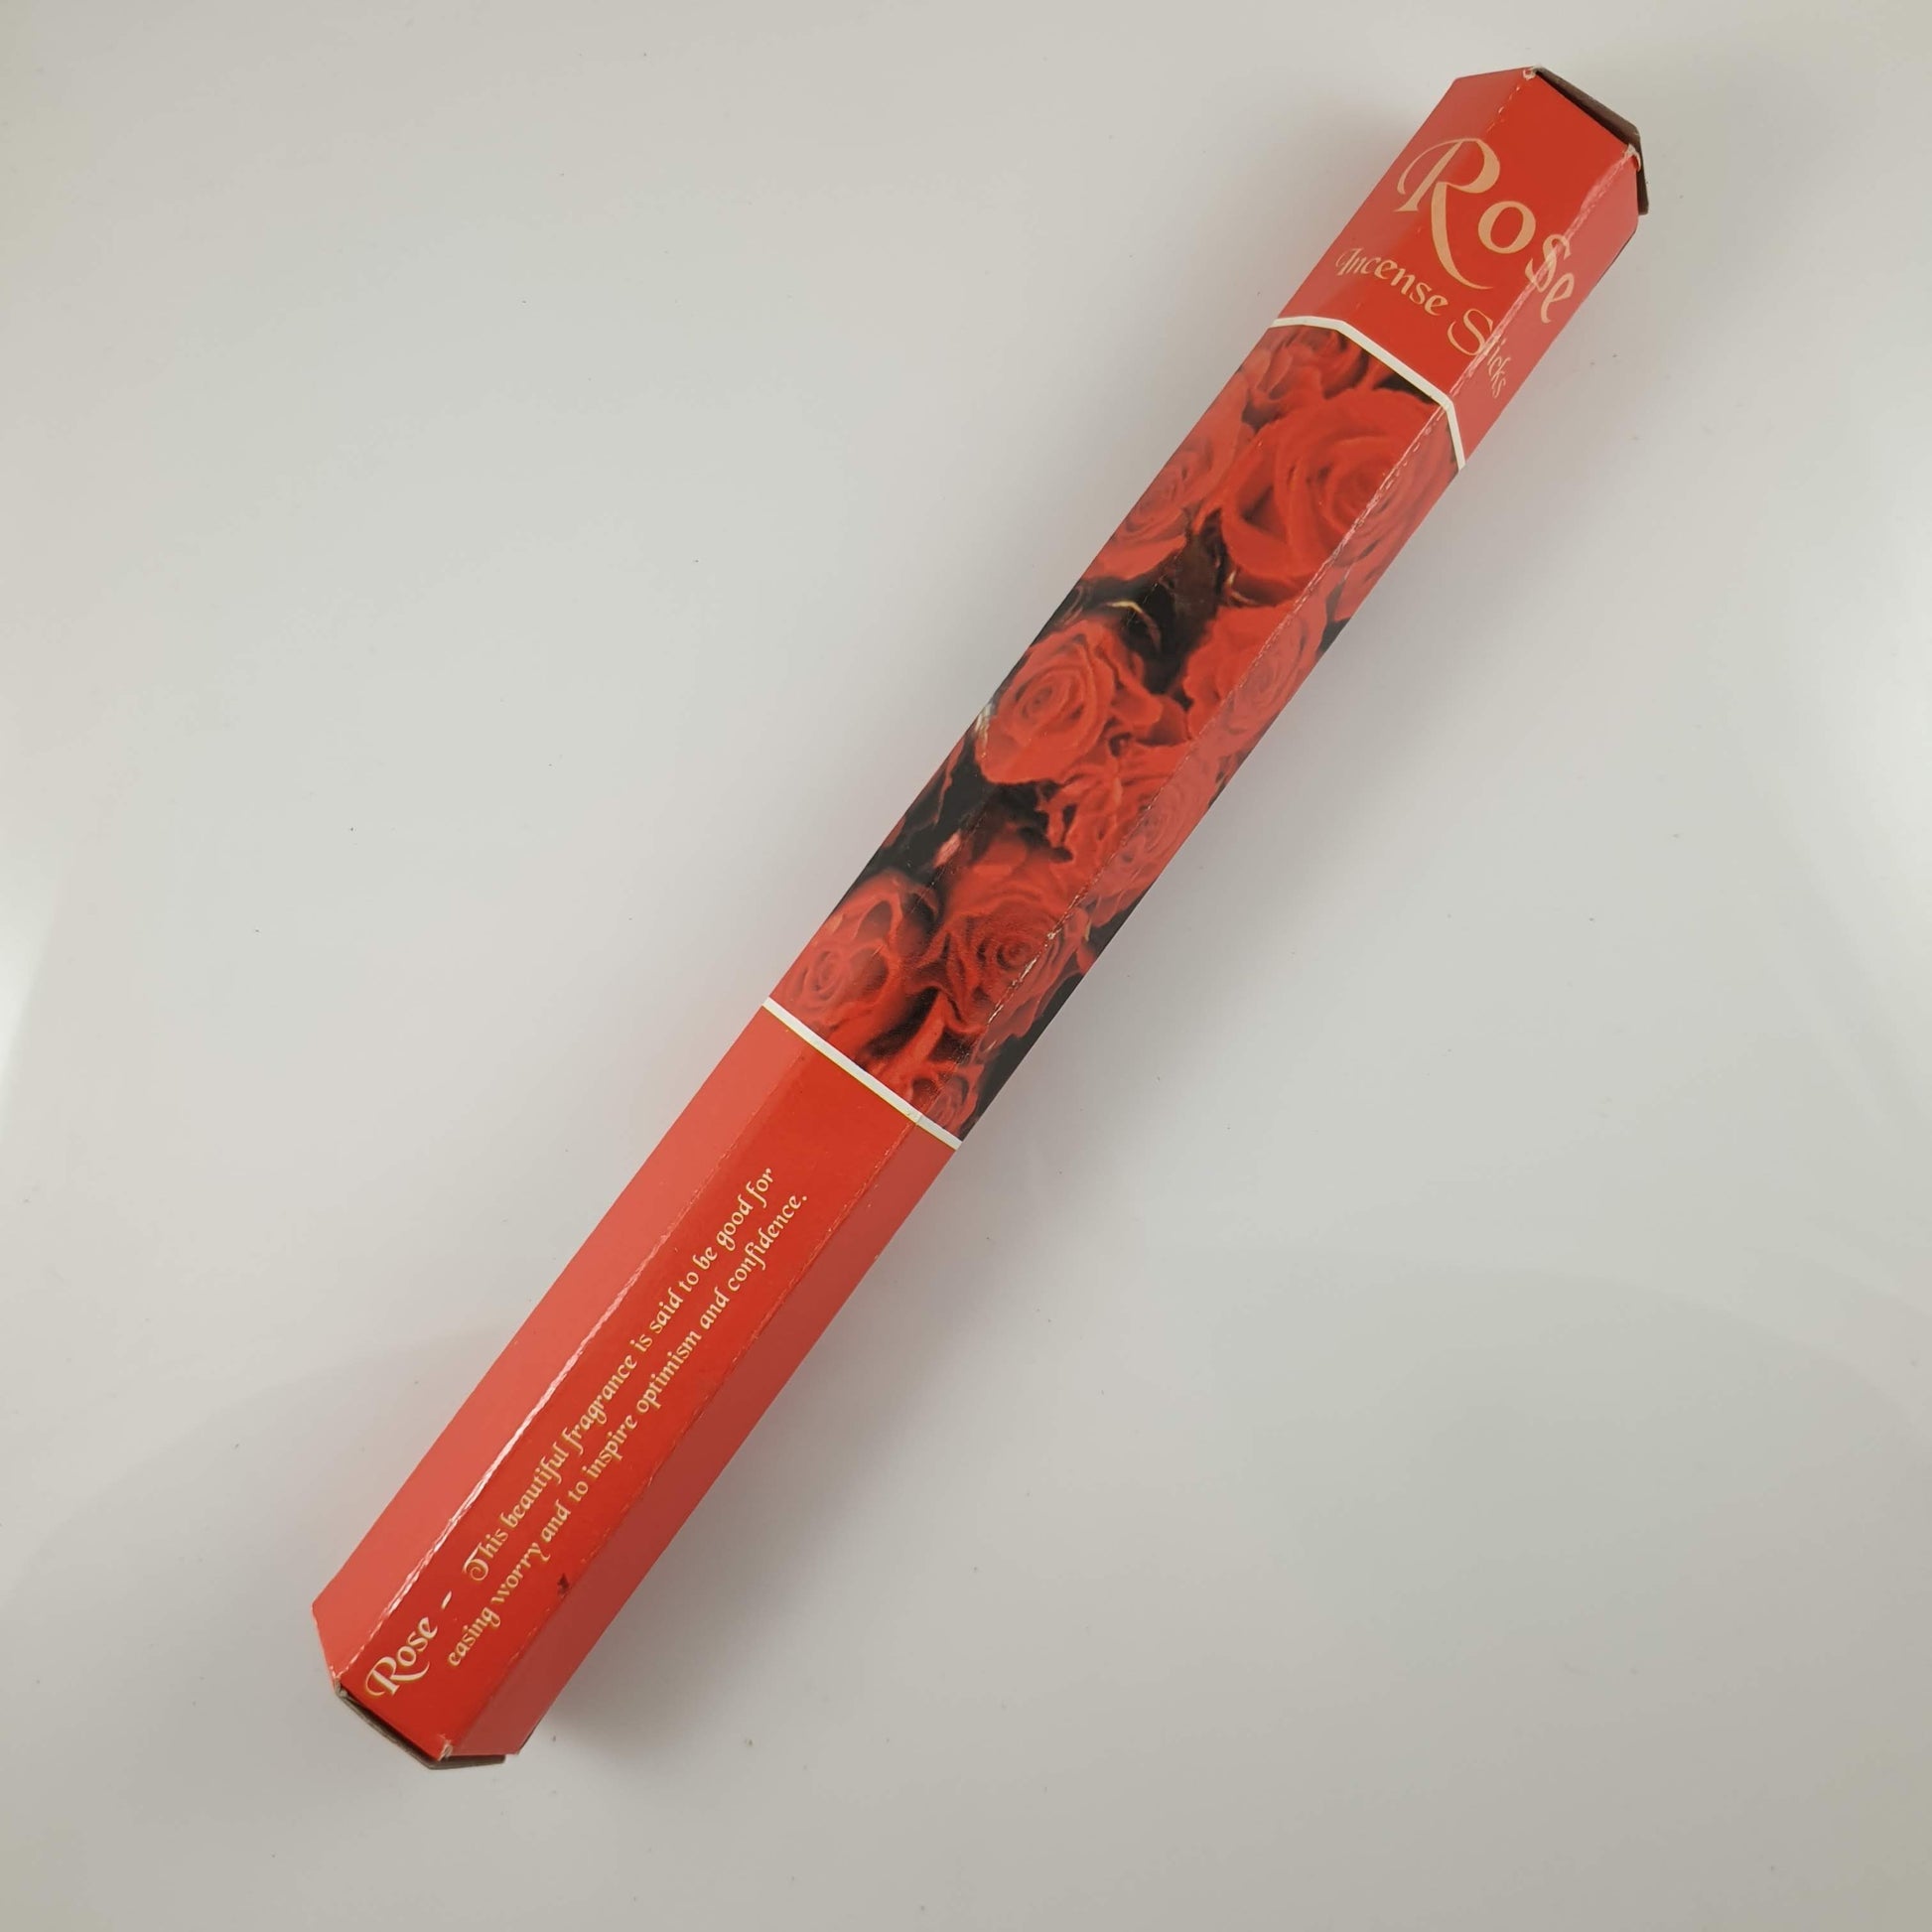 Kamini Rose Incense 20gm Hex Packet 6 Pack - Rivendell Shop